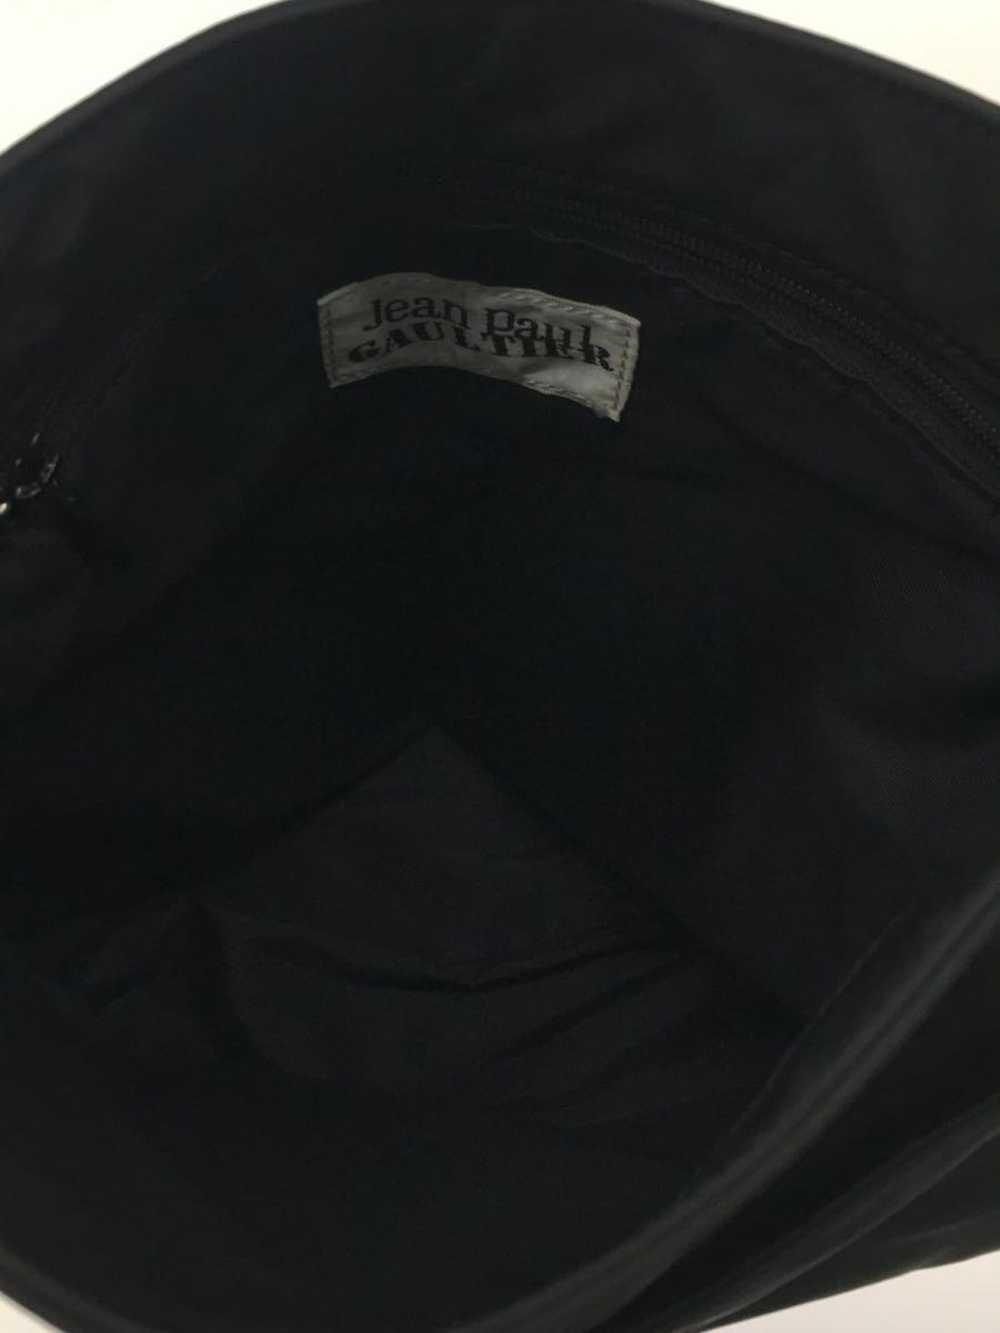 Jean Paul Gaultier Dragon Shoulder Bag - image 5